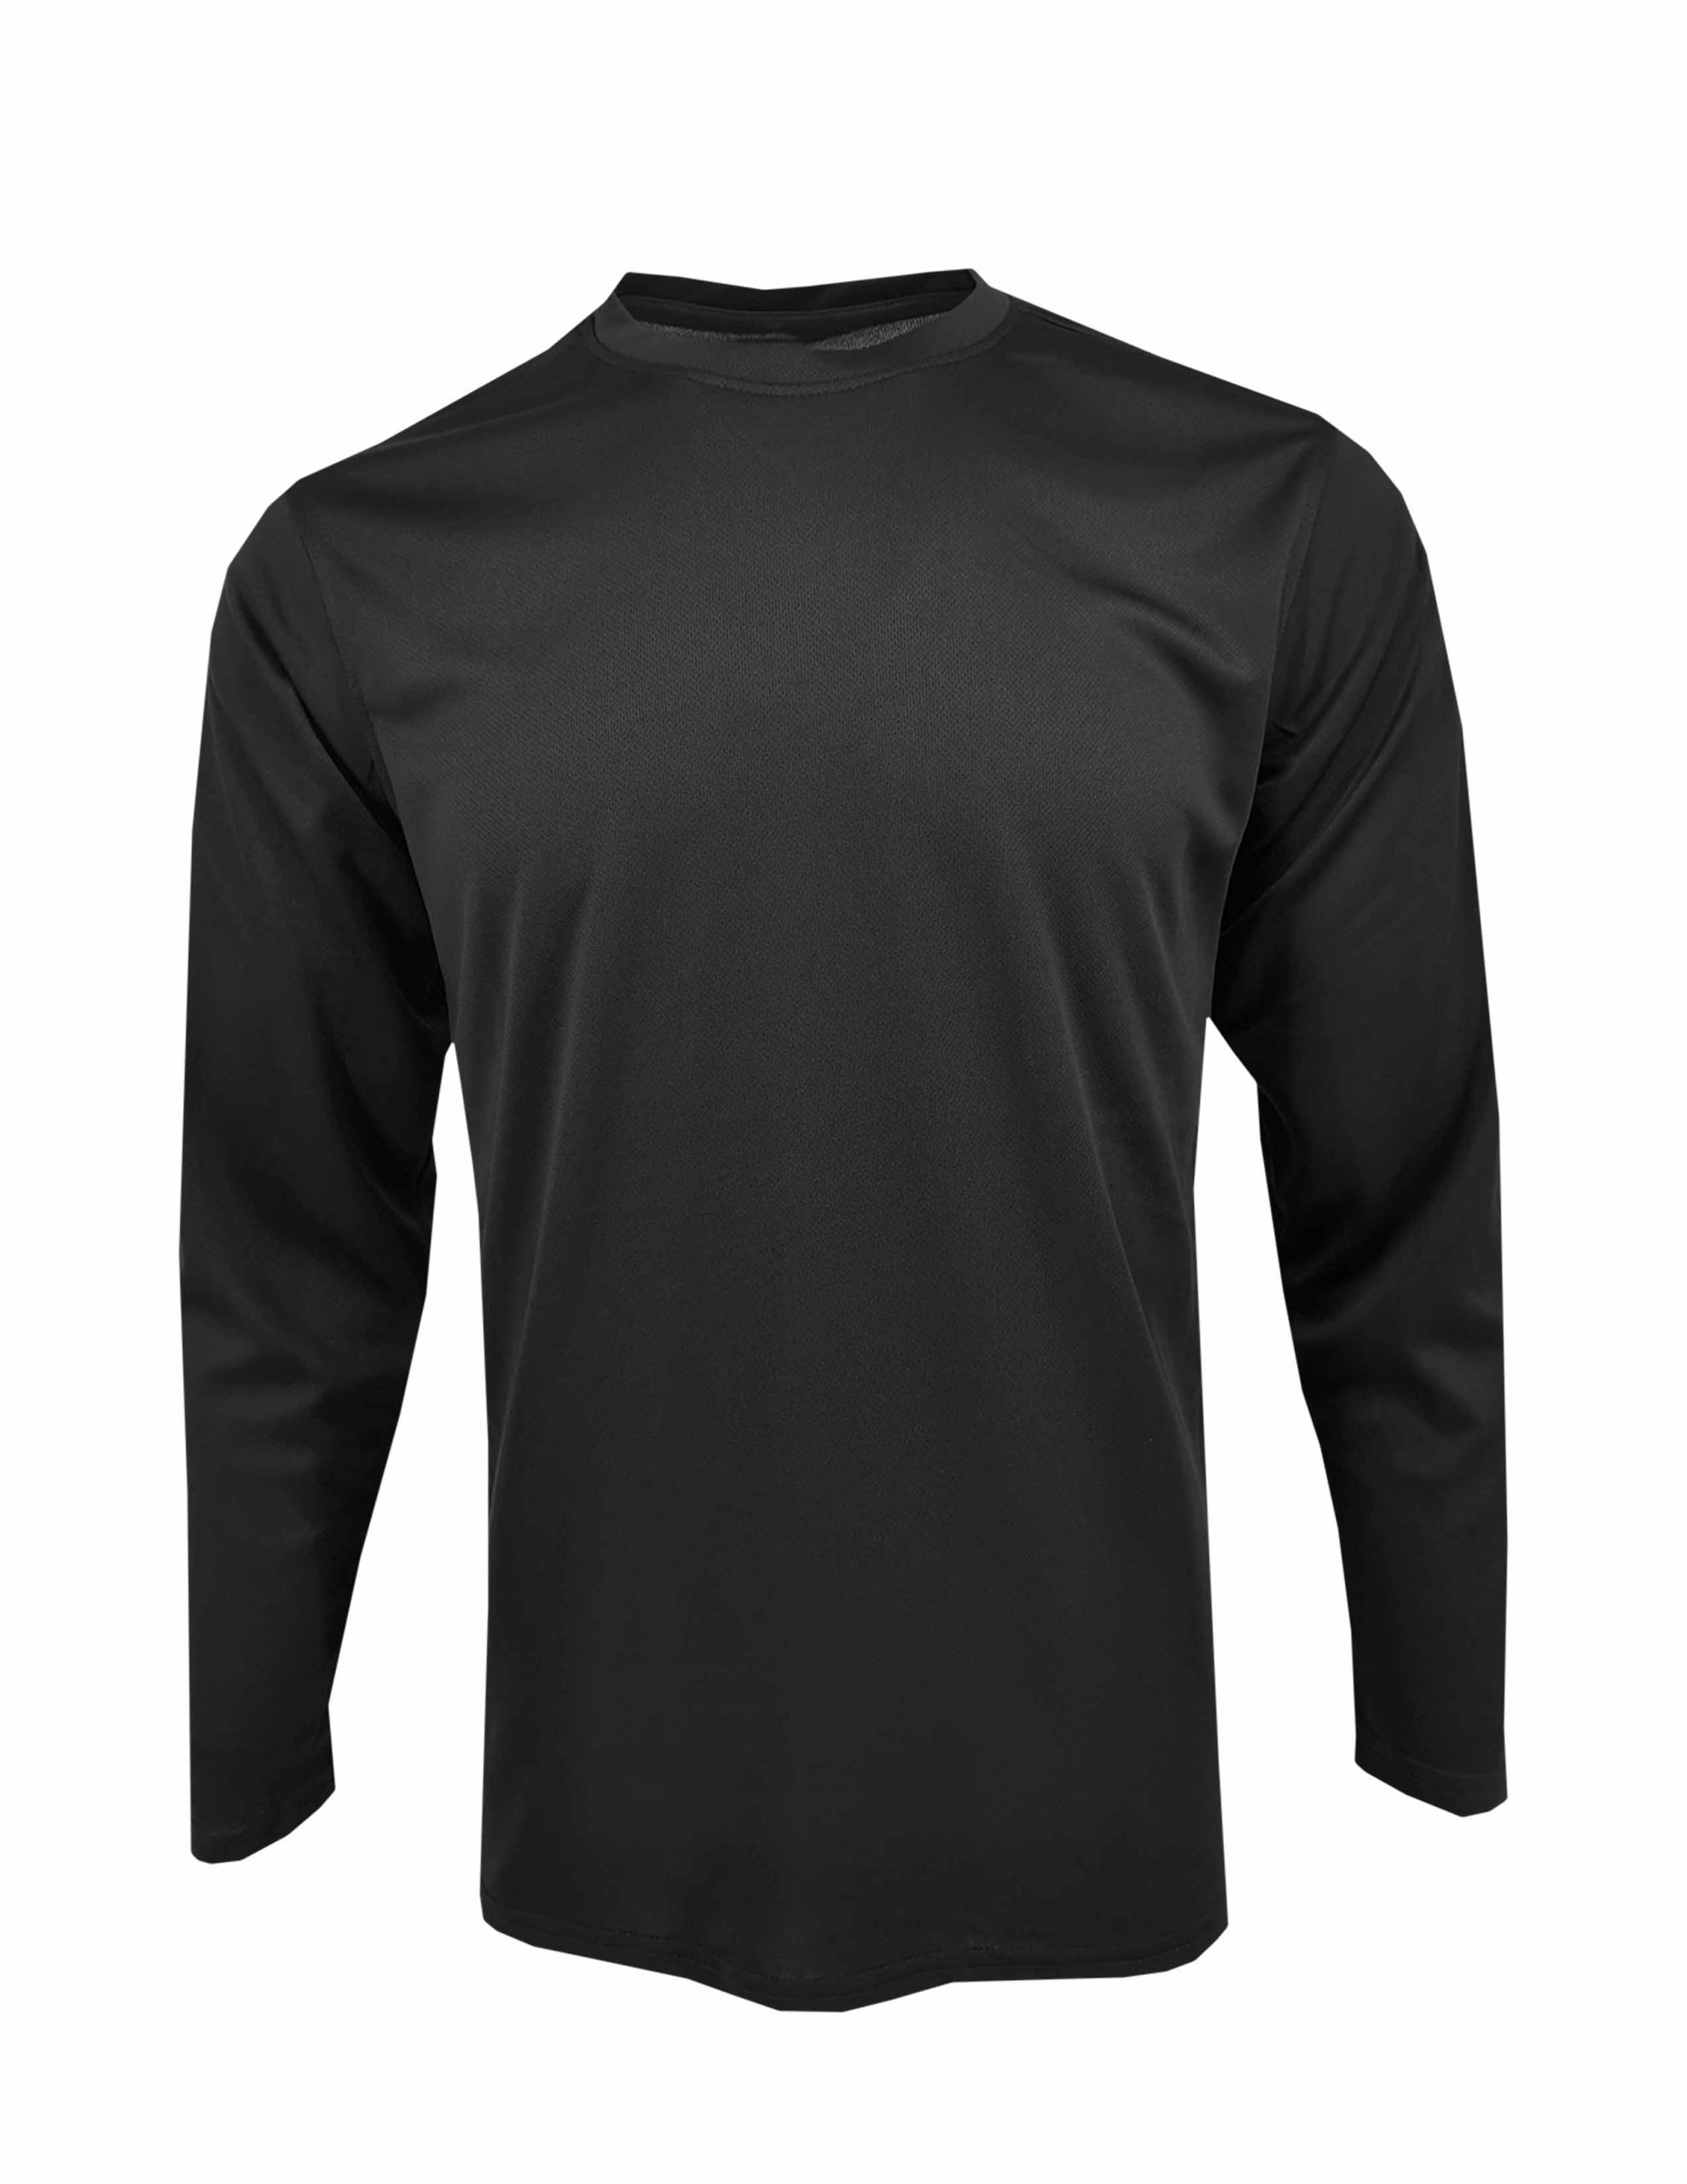 QDL 5410 Black - Rightway Basic T-Shirt | Basic T-Shirt Supplier ...